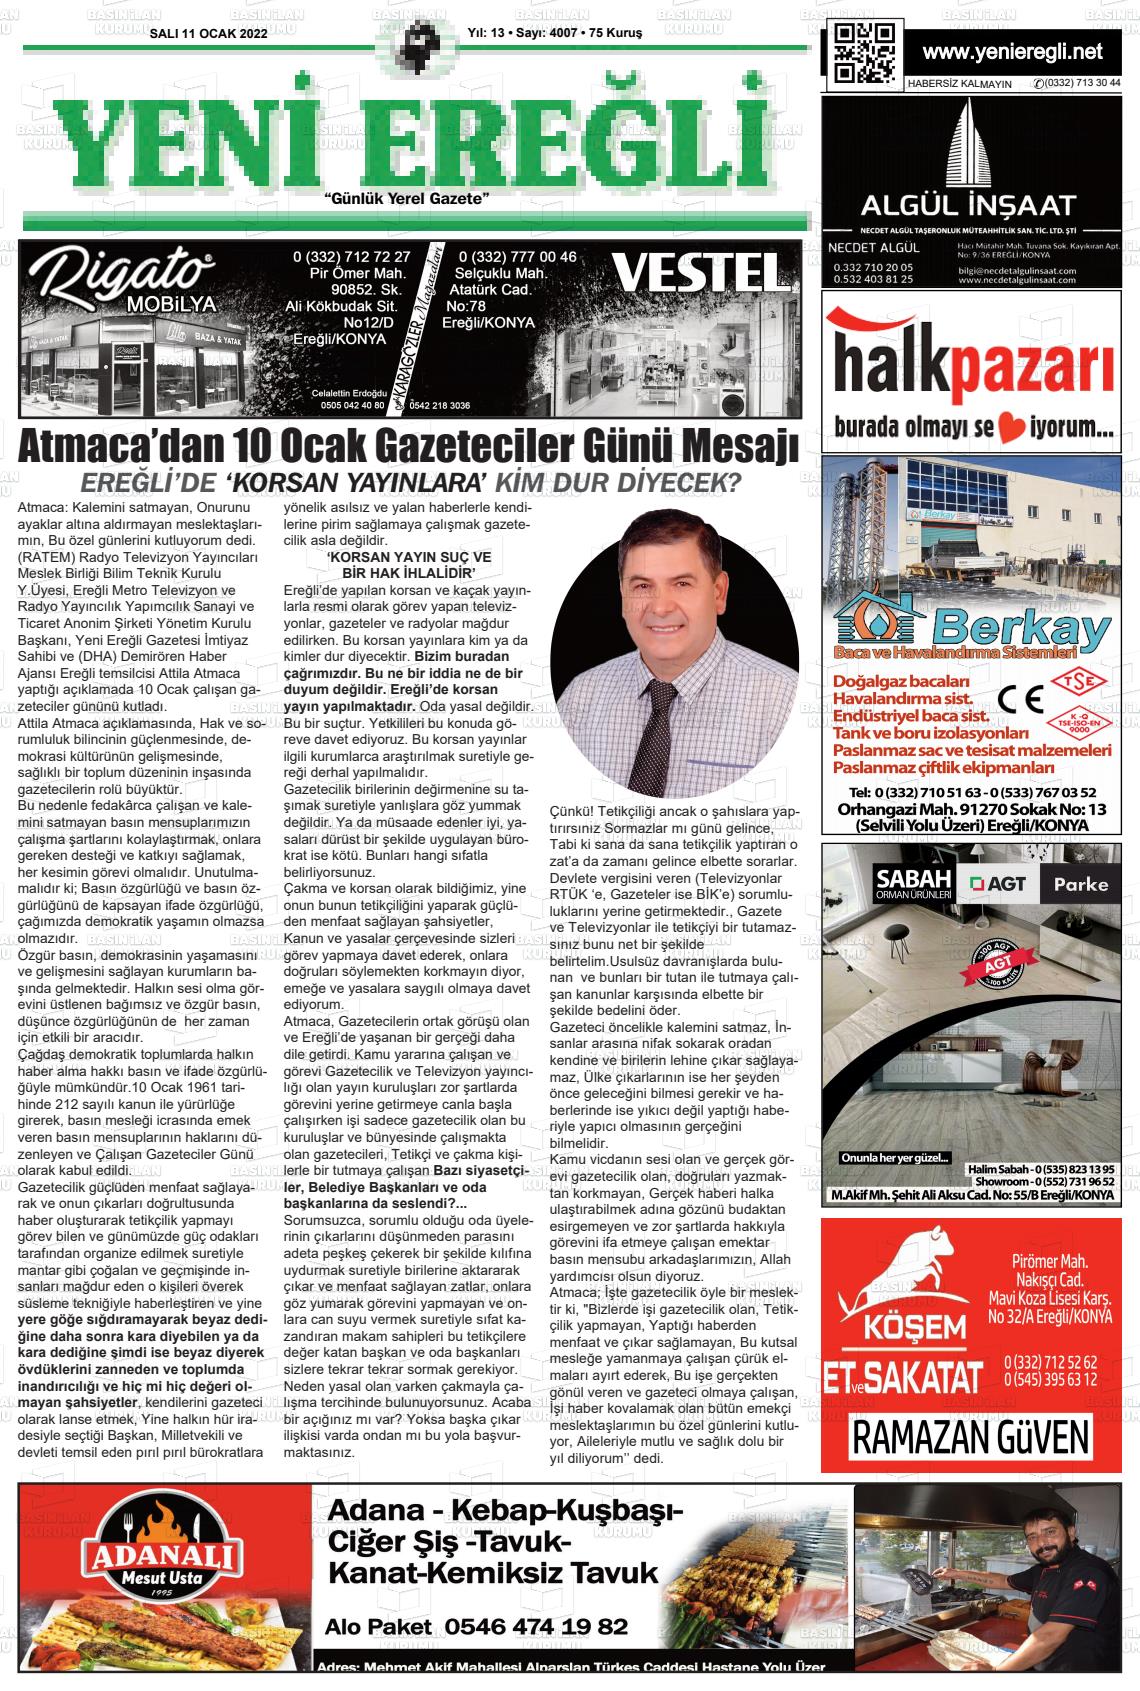 11 Ocak 2022 Yeni Ereğli Gazete Manşeti